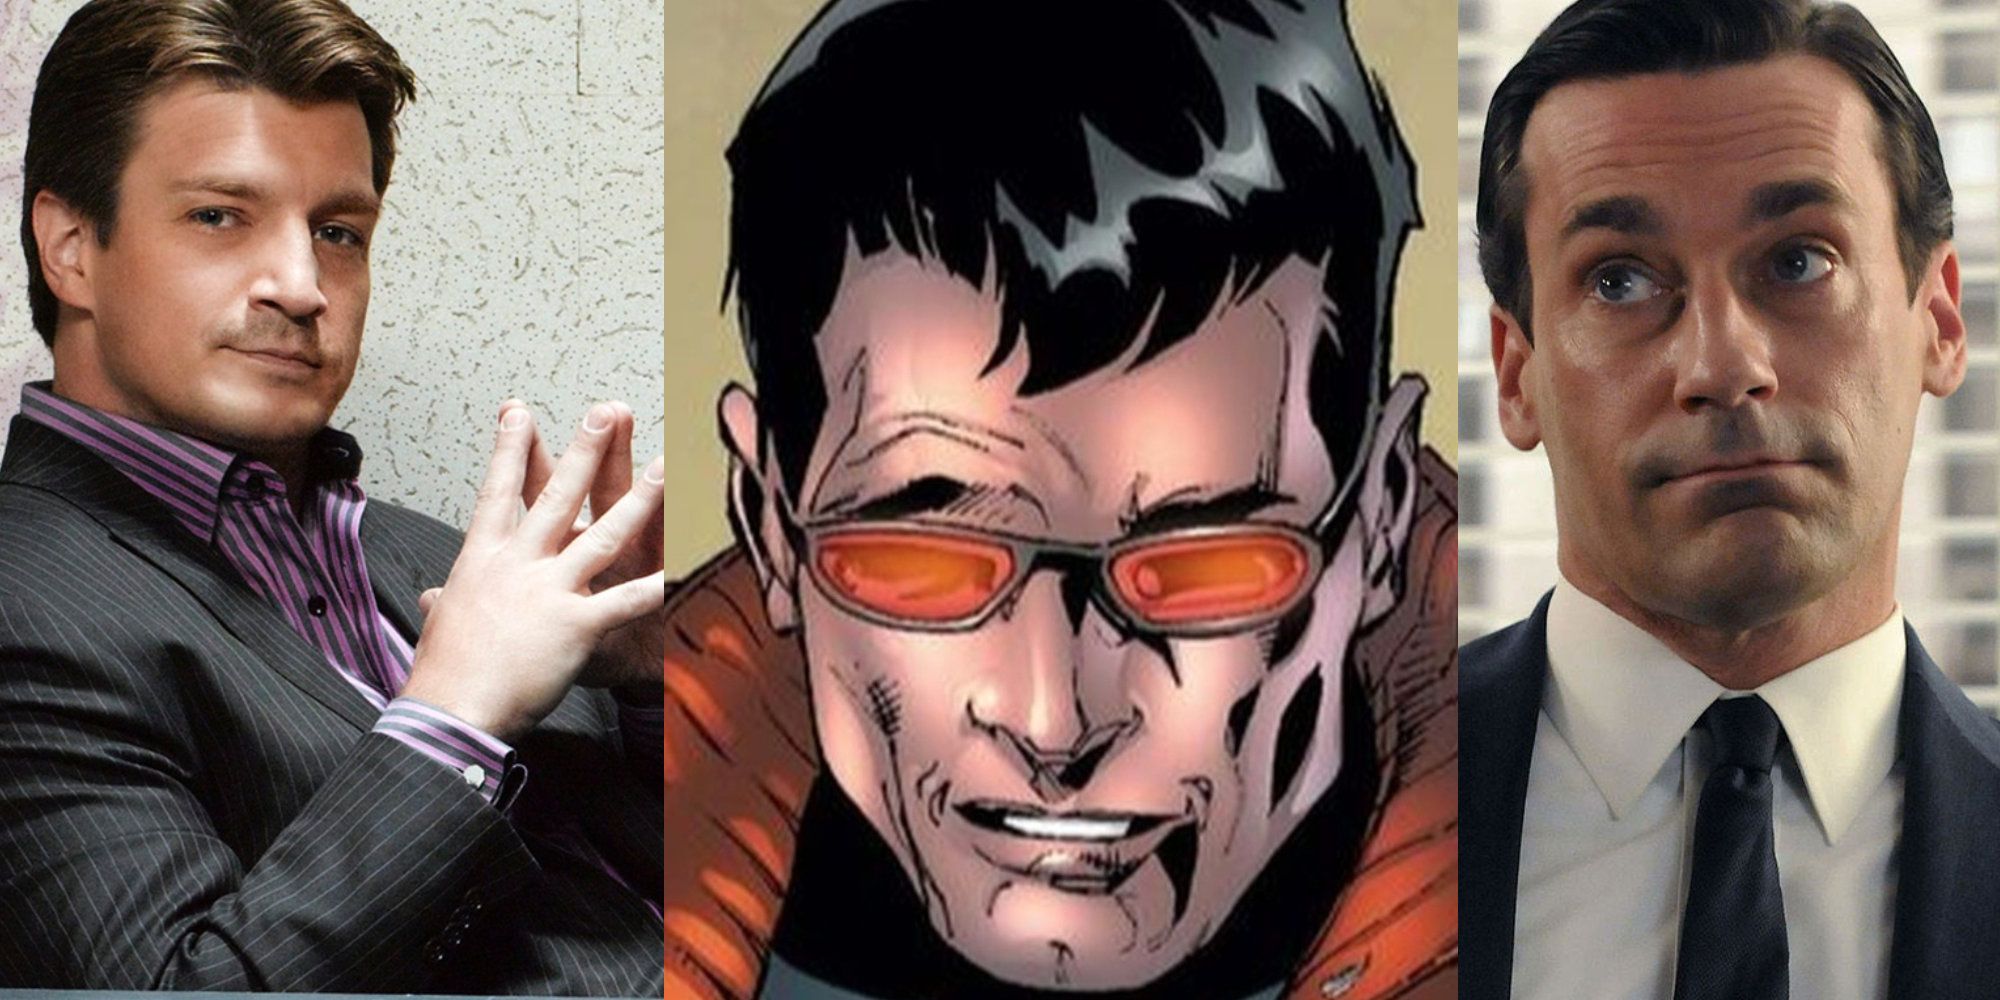 split image of Wonderman and actors Nathan Fillion and John hamm